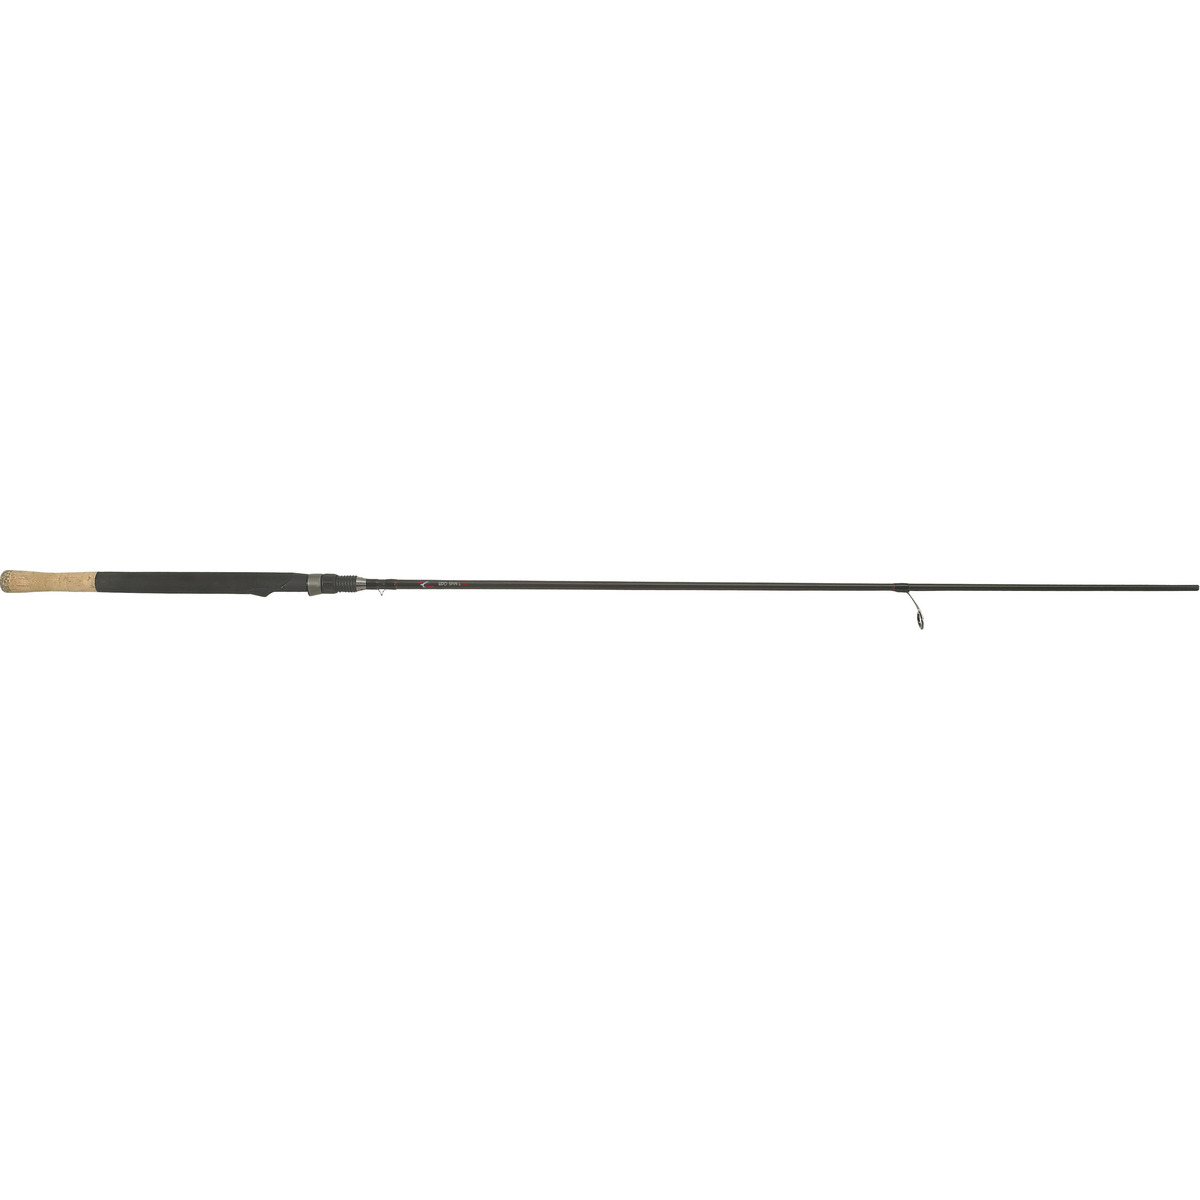 Iron Claw Edo Spin L - 270 cm - 3-12 g